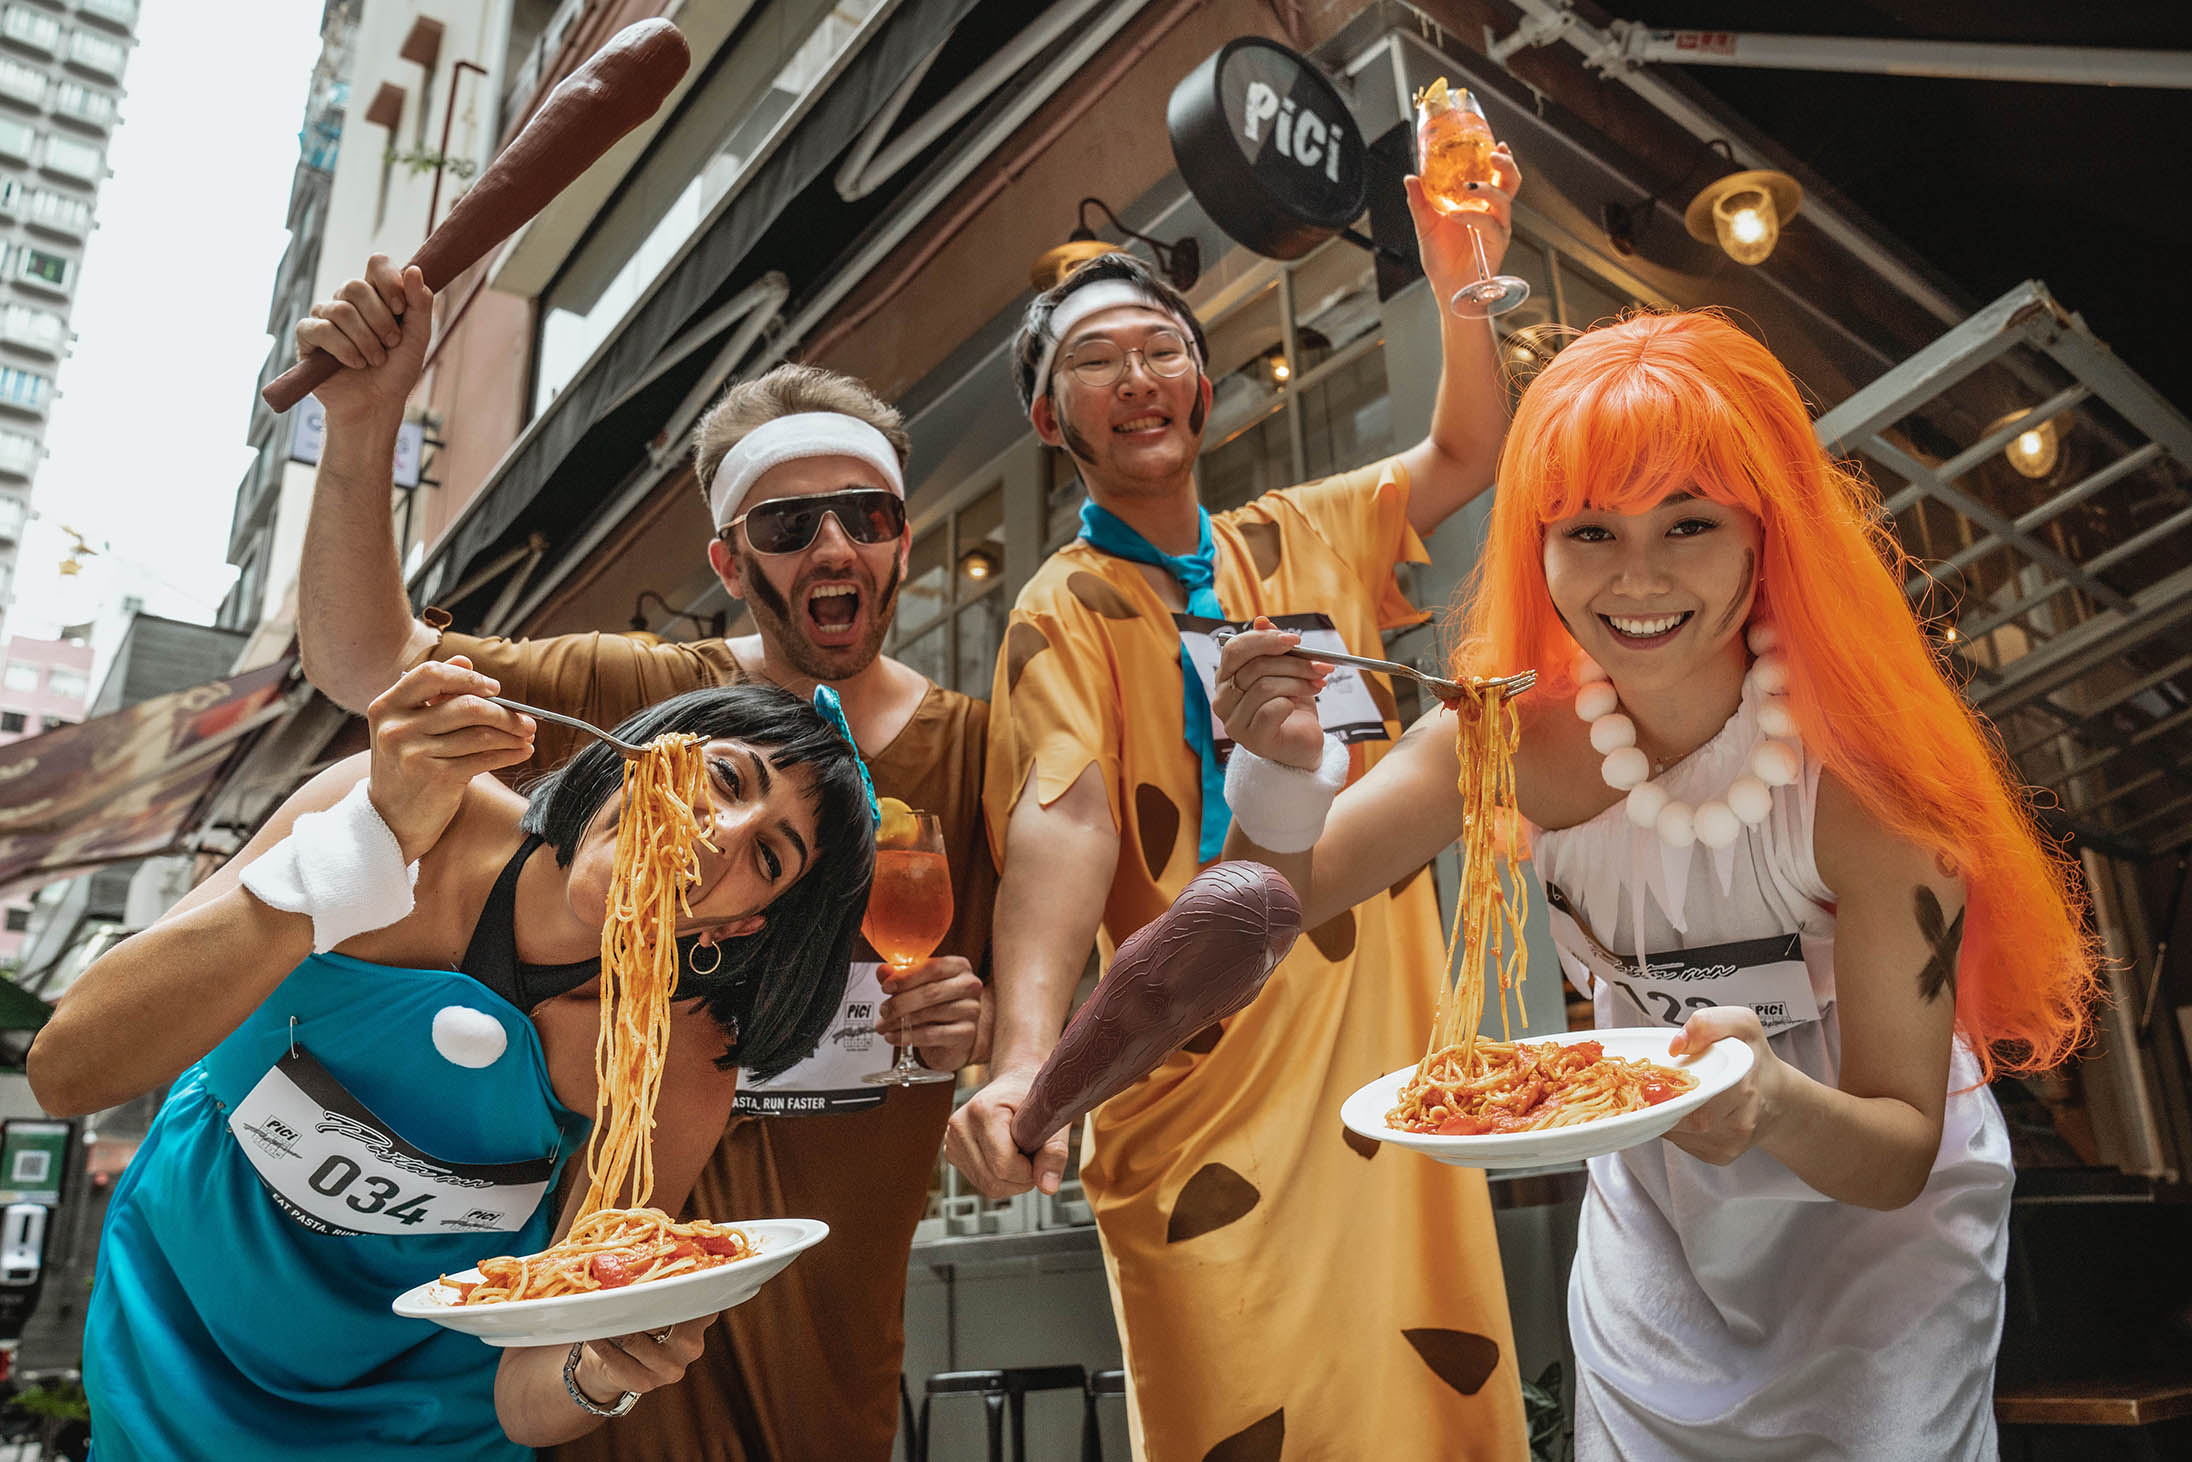 A team participating in the Pici Pasta Run